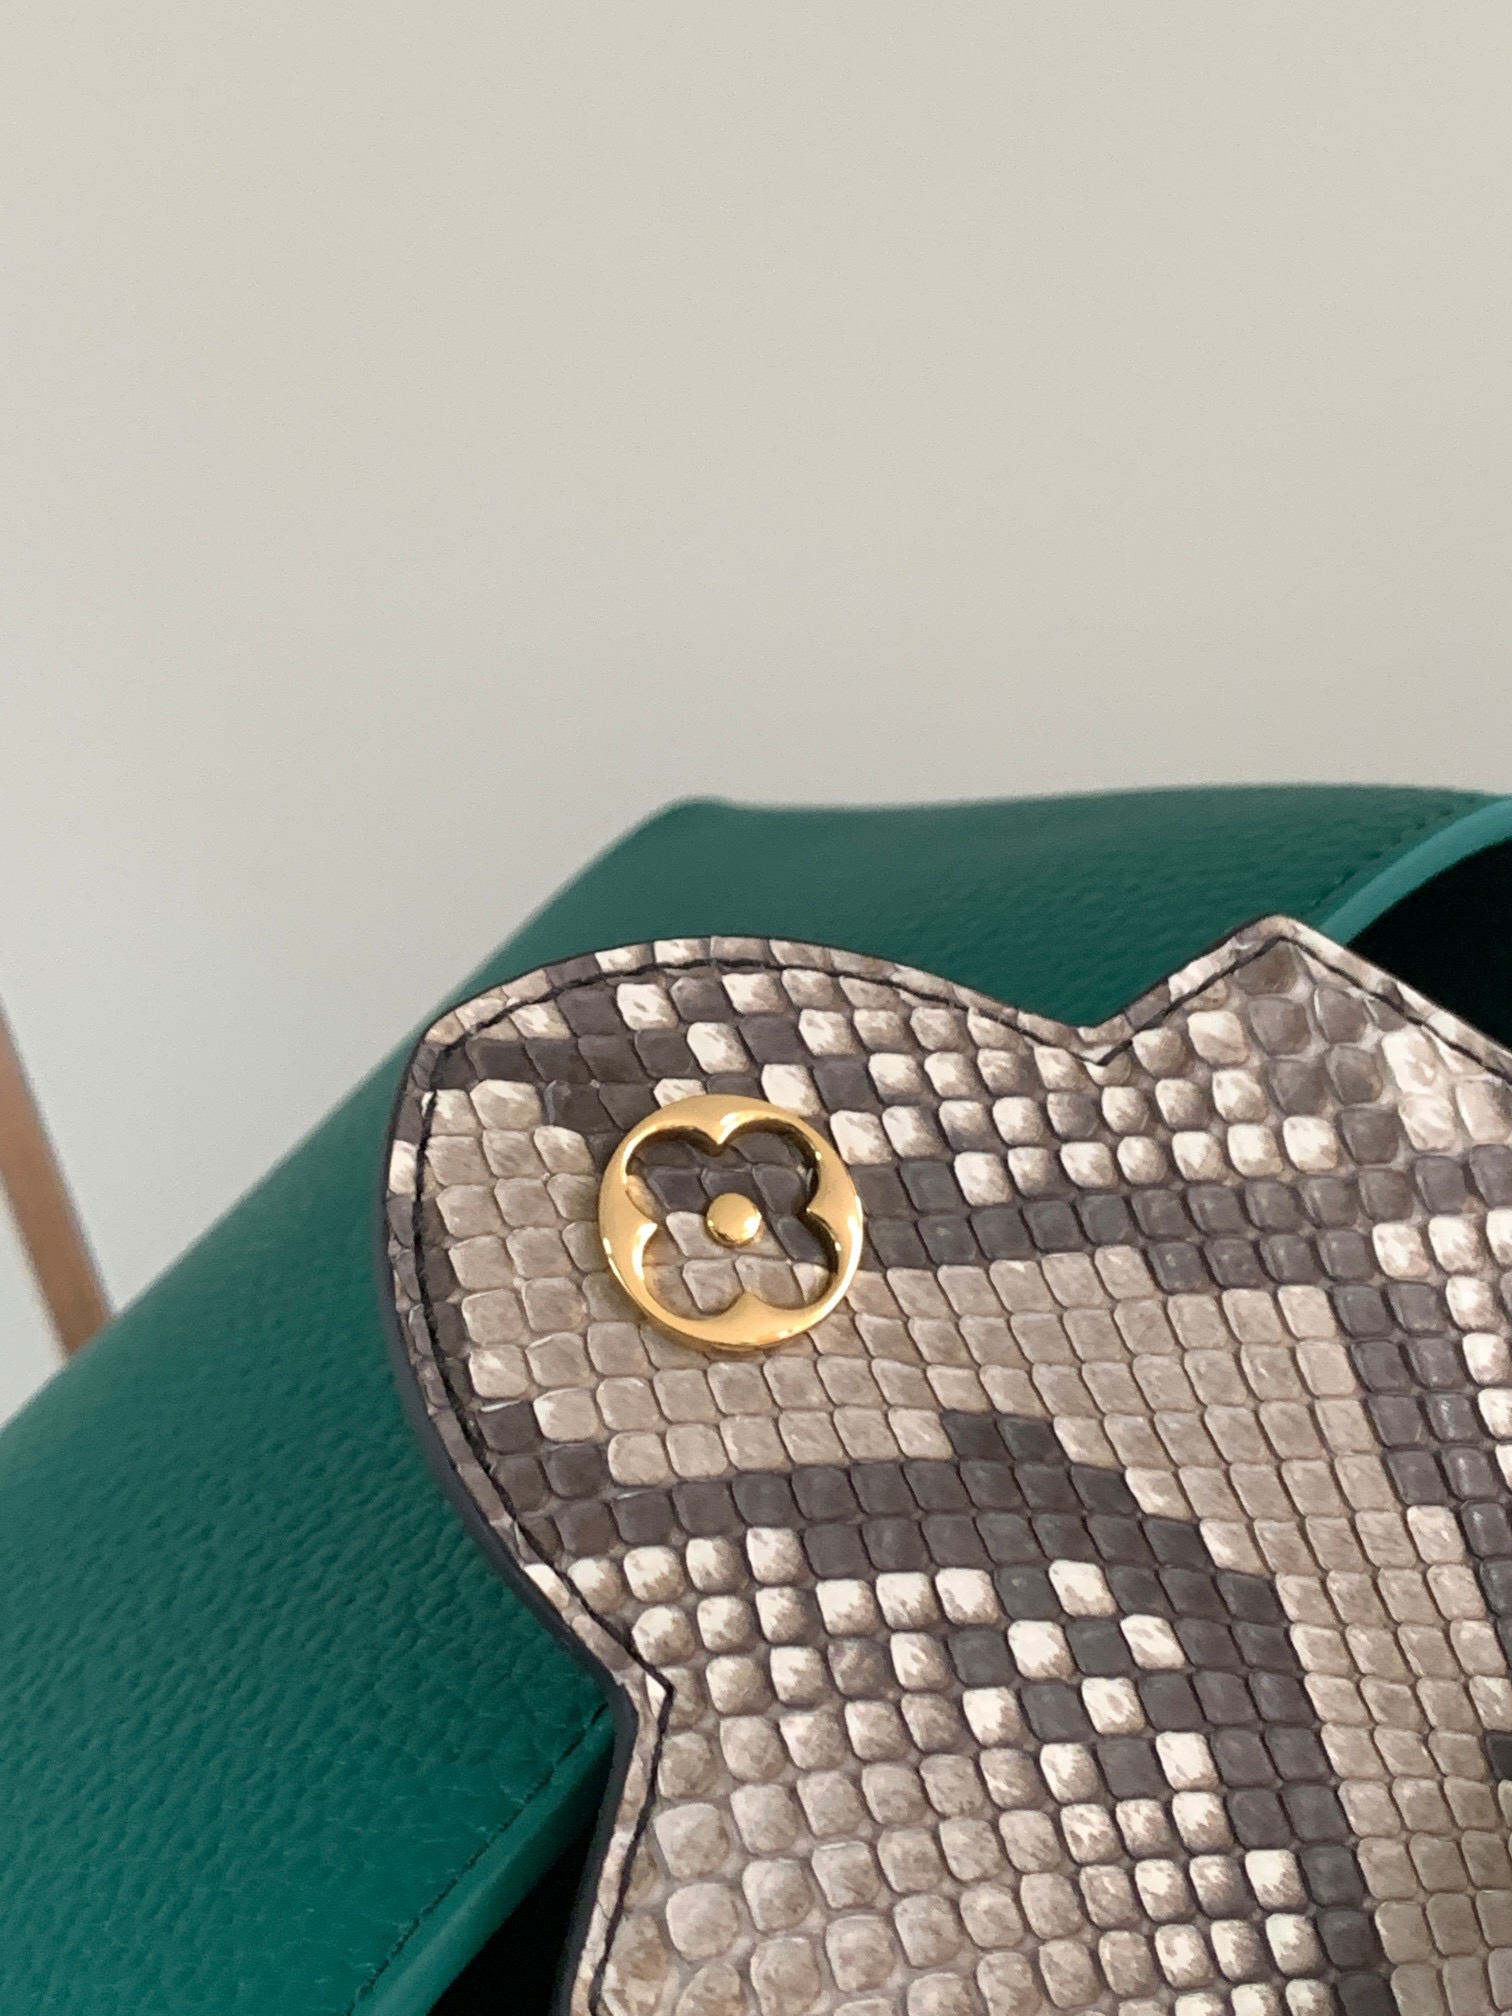 Louis Vuitton Emeraud Python Capucines BB Bag